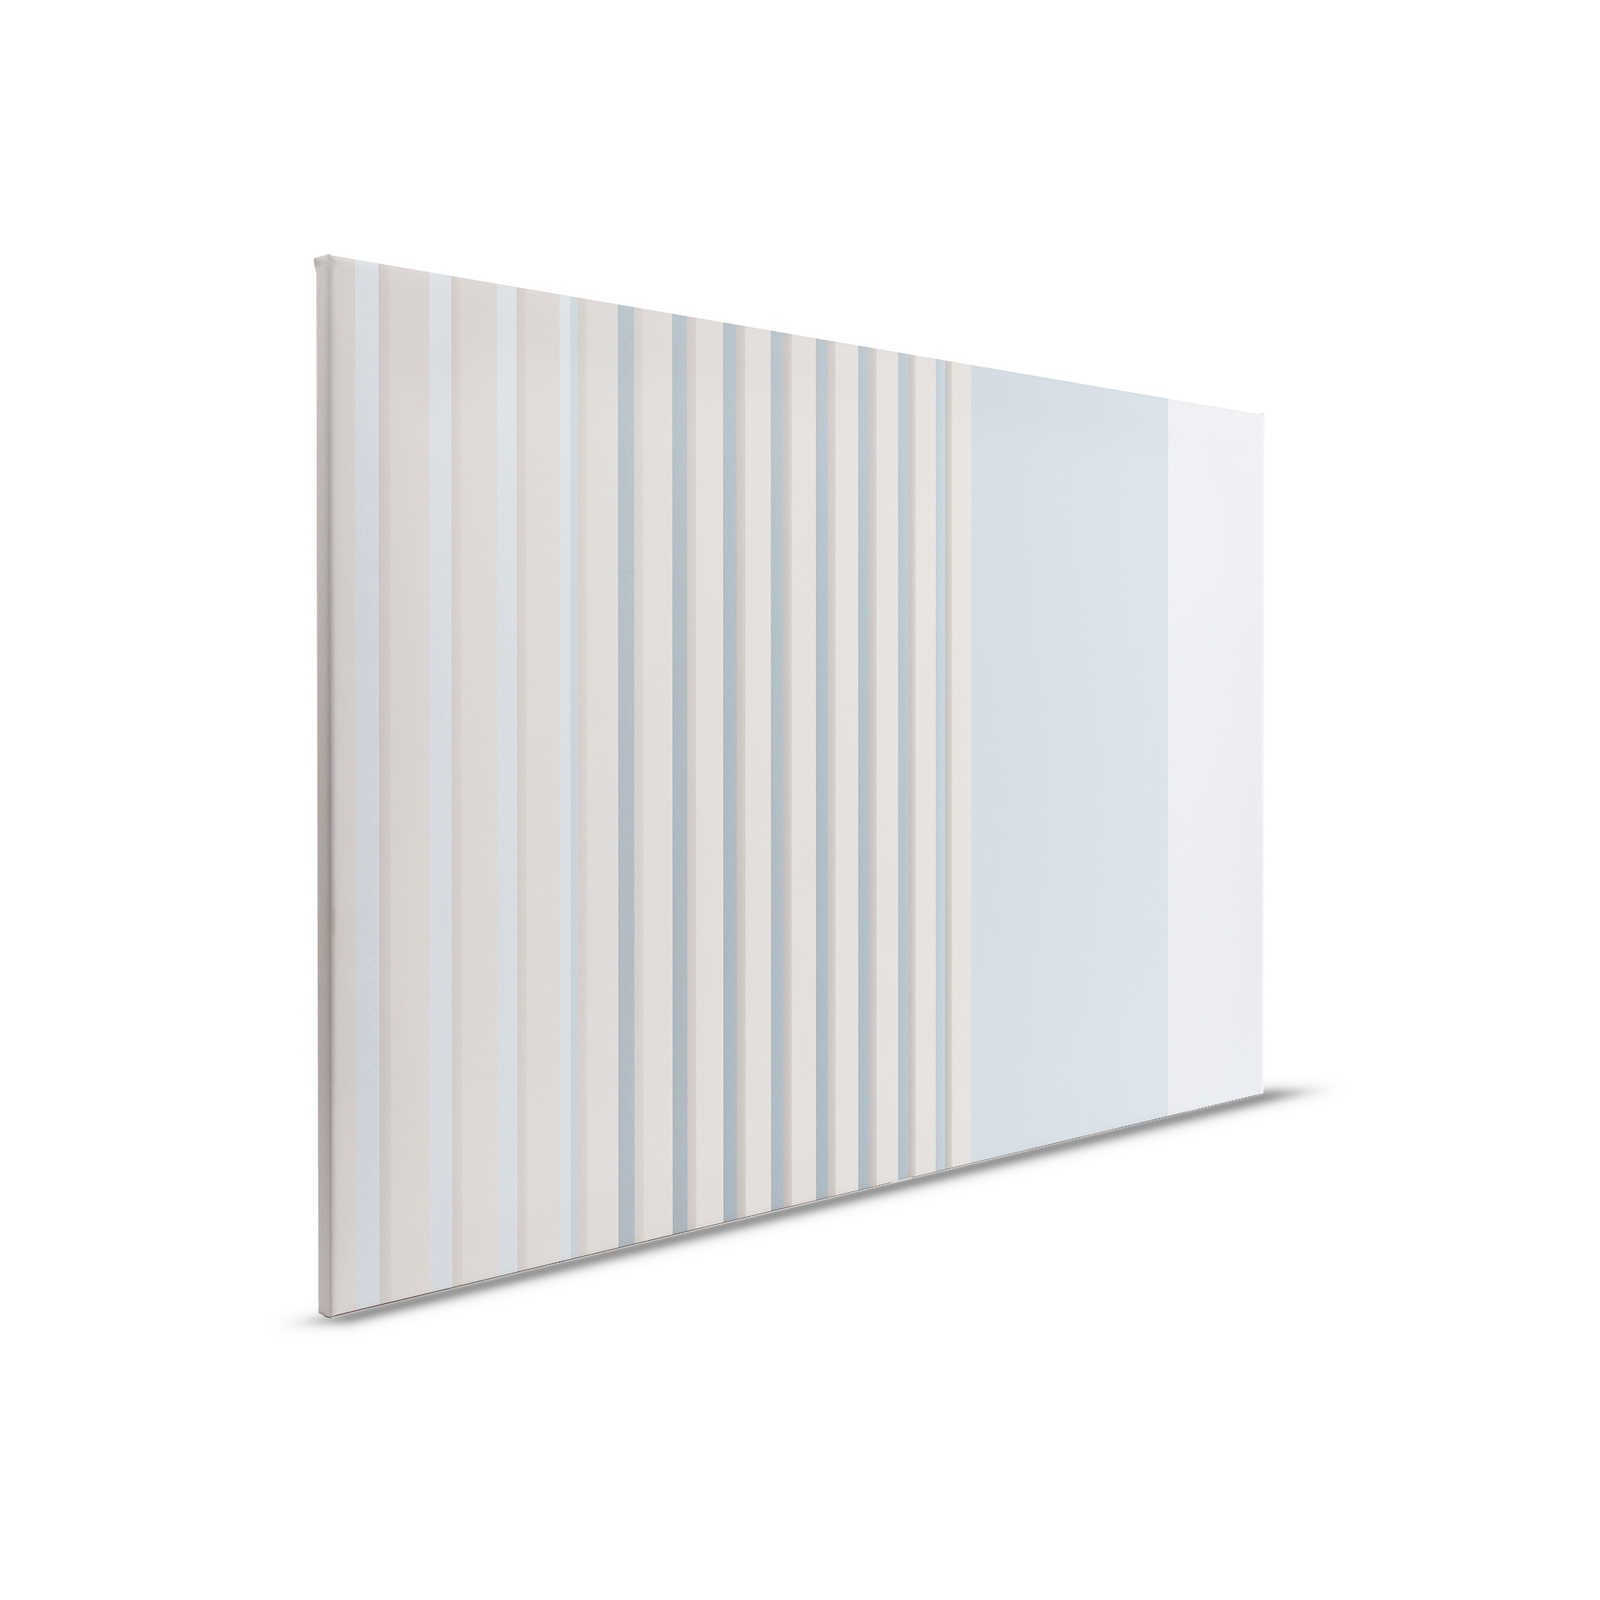         Illusion Room 2 - Canvas painting 3D Stripe Design in Blue & Grey - 0.90 m x 0.60 m
    